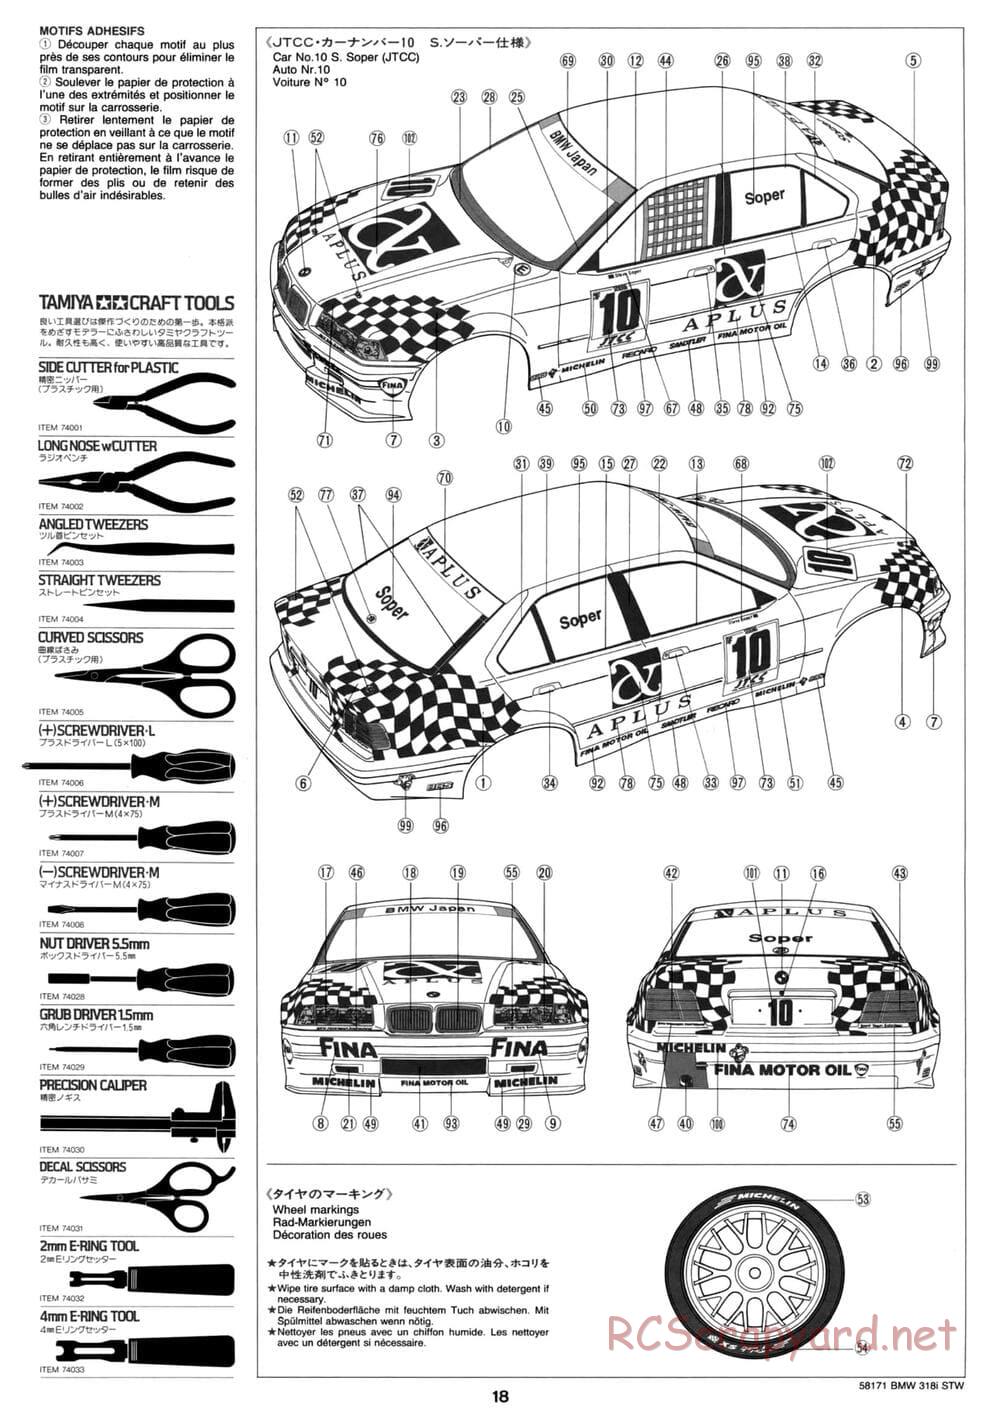 Tamiya - BMW 318i STW - TA-02 Chassis - Manual - Page 18